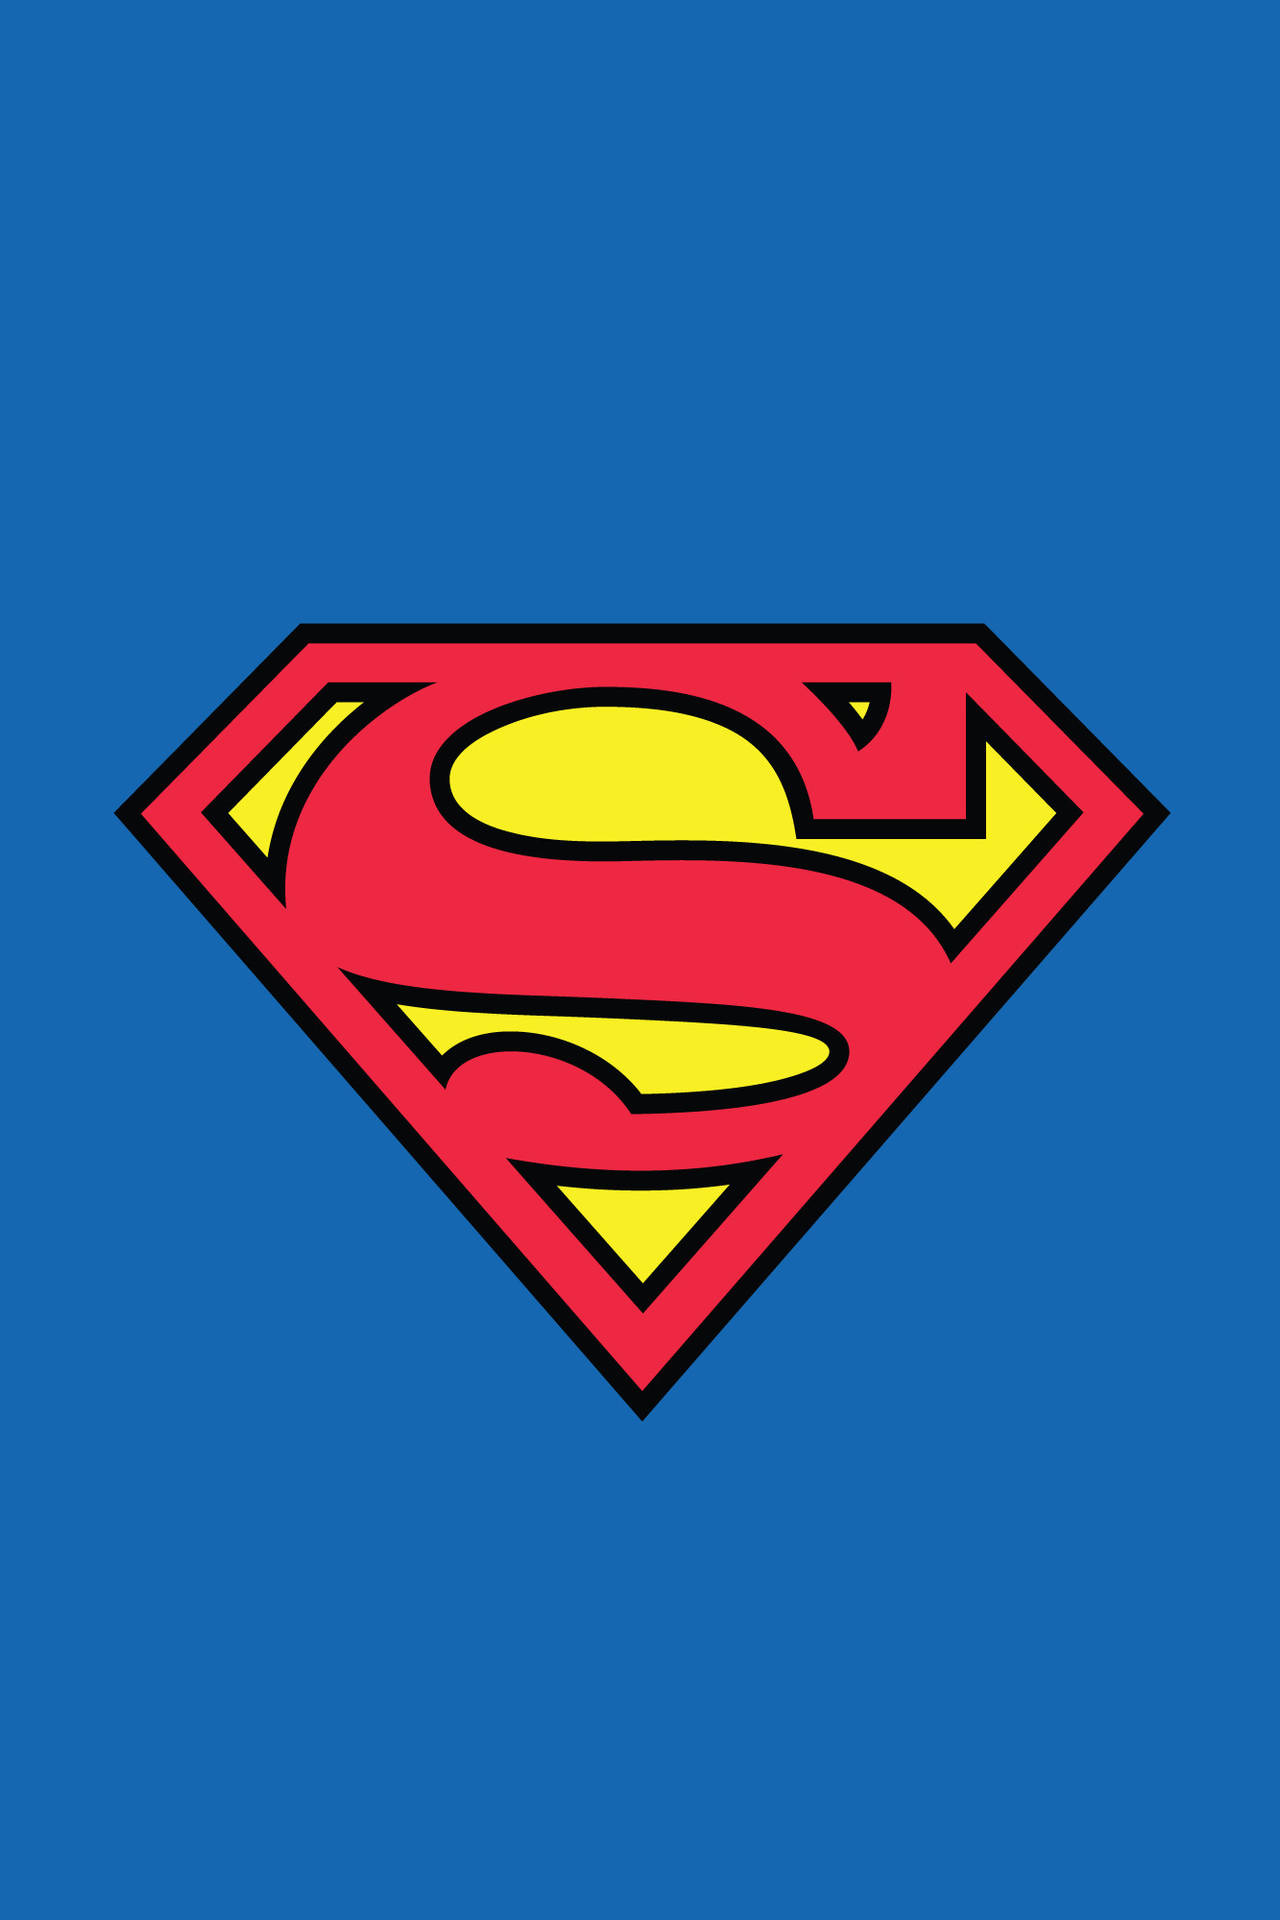 Free Superman iPhone Wallpaper Downloads, Superman iPhone Wallpaper for FREE